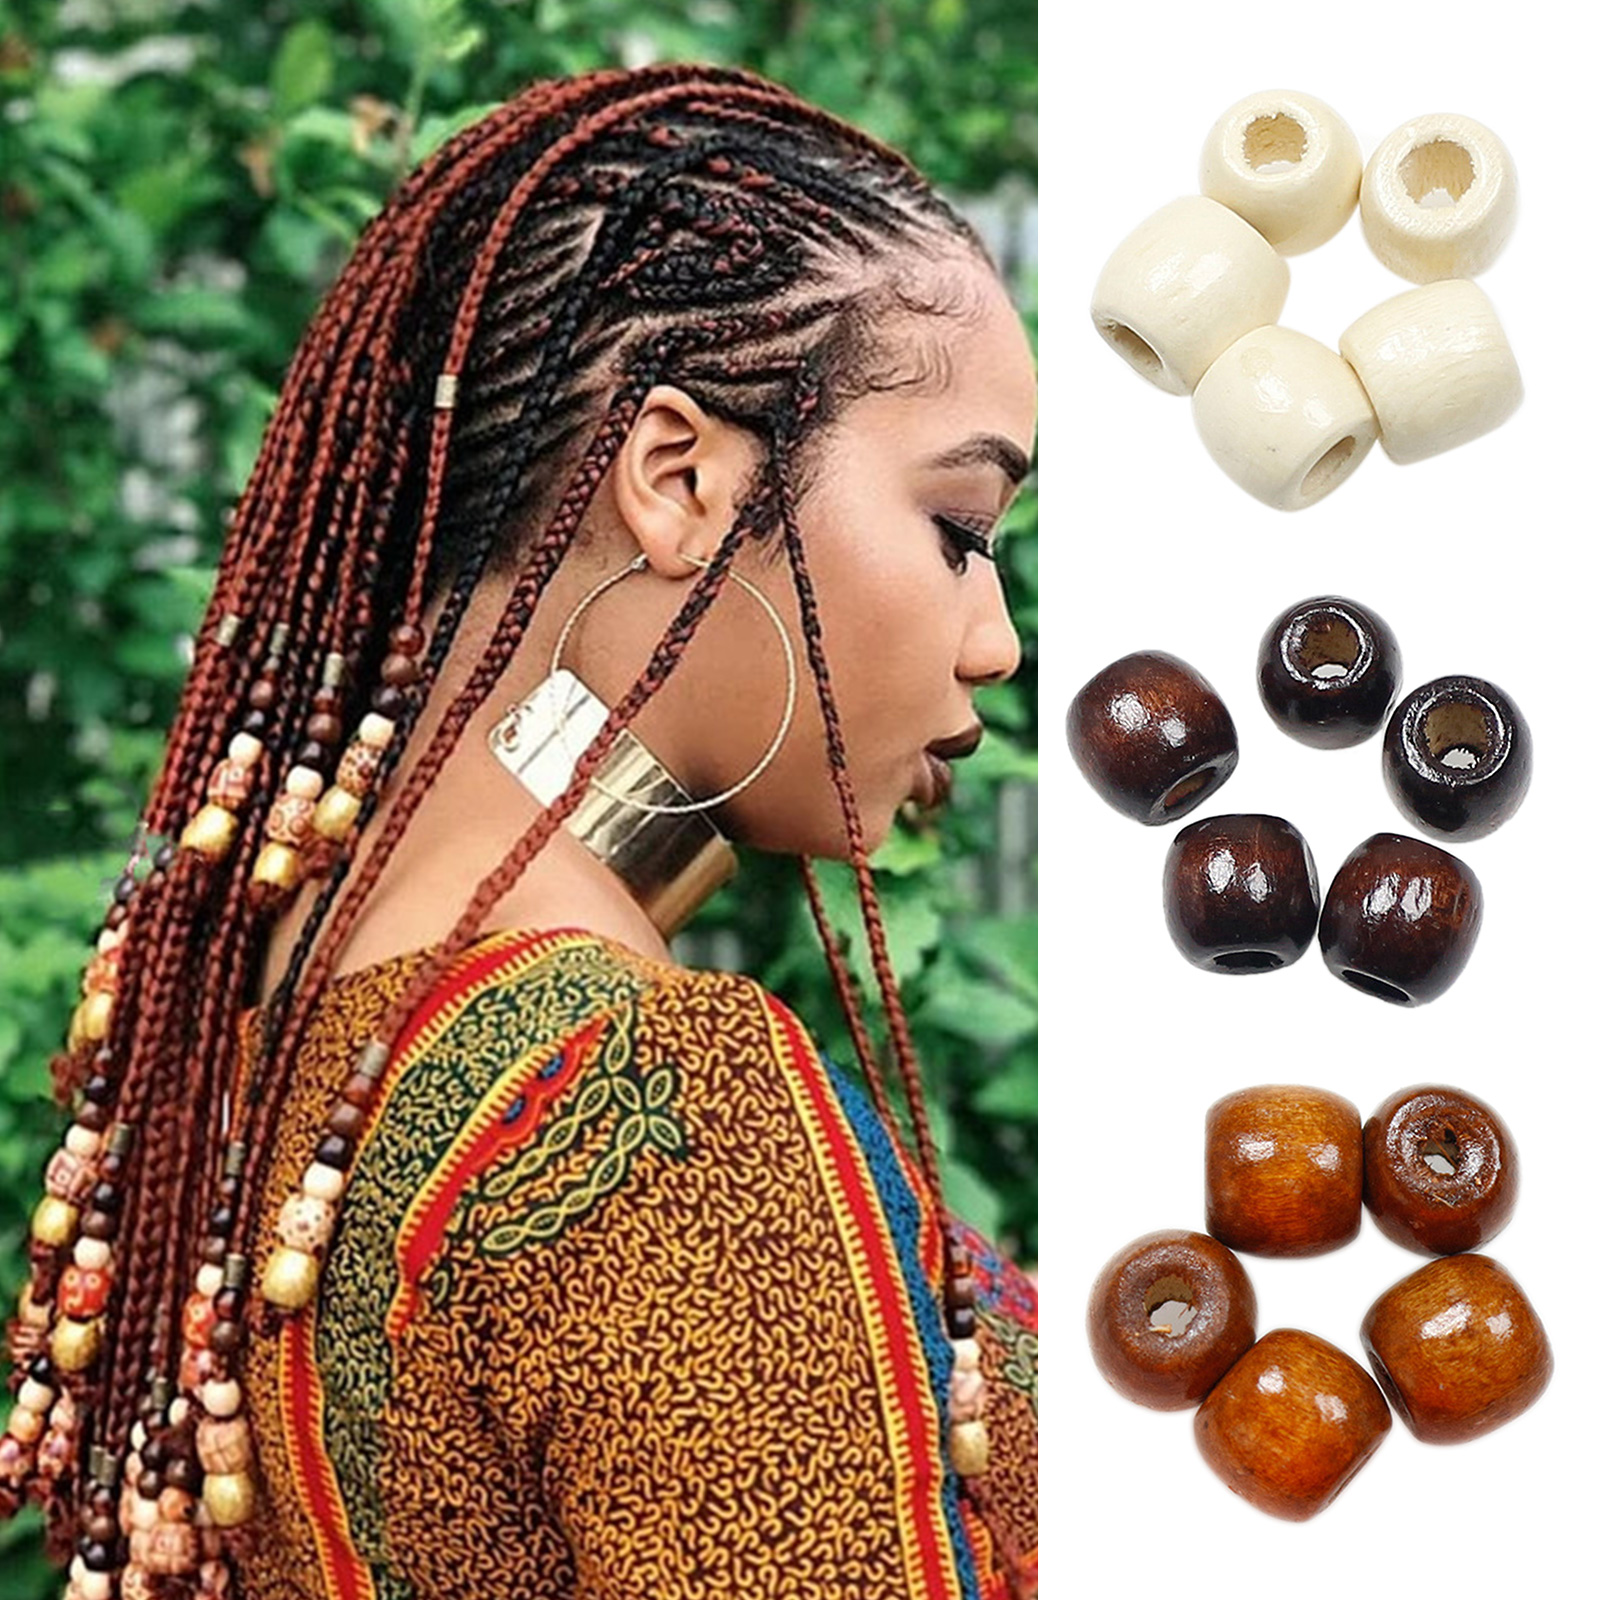 JNANEEI Wooden Beads Mini Beads Hair Accessories for Hair Braid